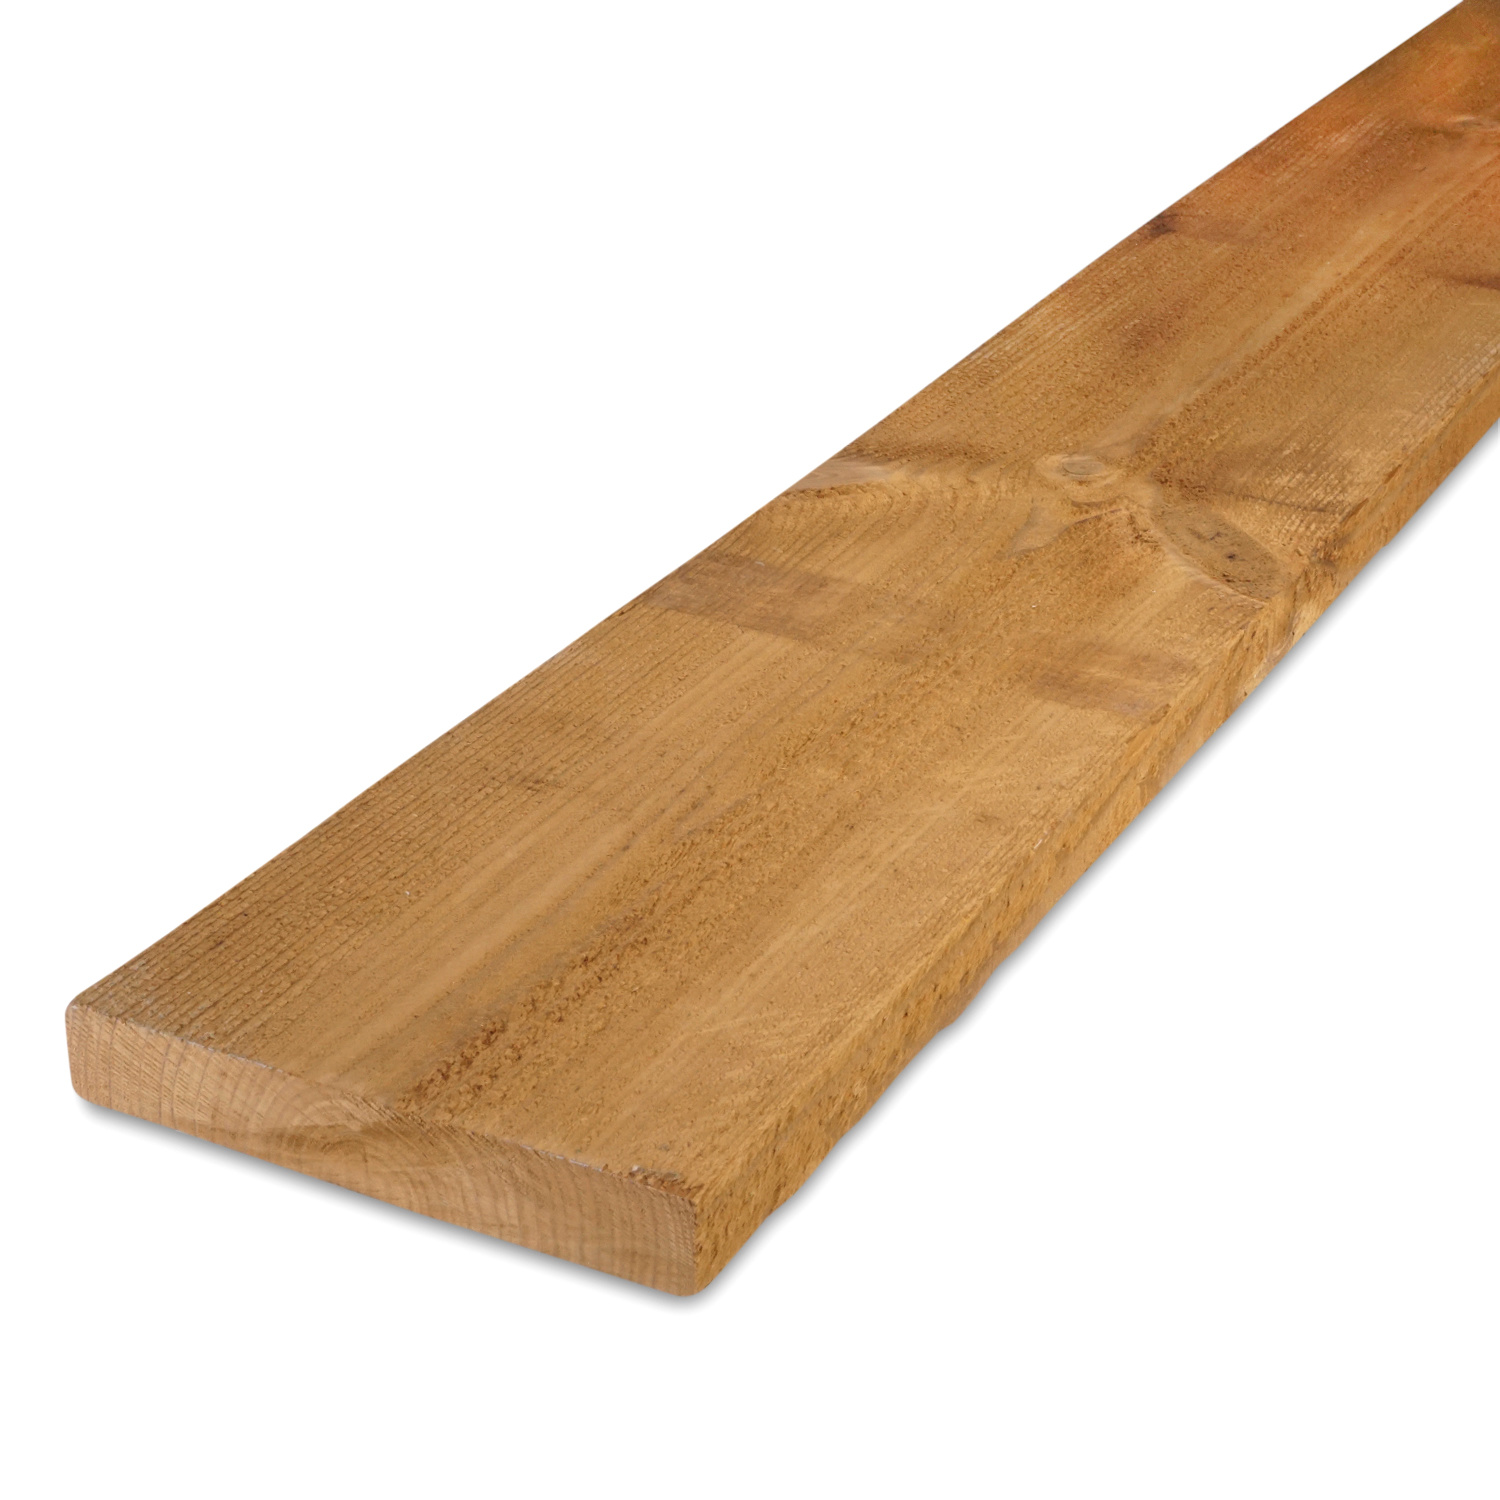 flauw dosis Niet essentieel Thermowood grenen plank 25x150mm - ruw thermo grenen kd (8-12%) | HOUTvakman